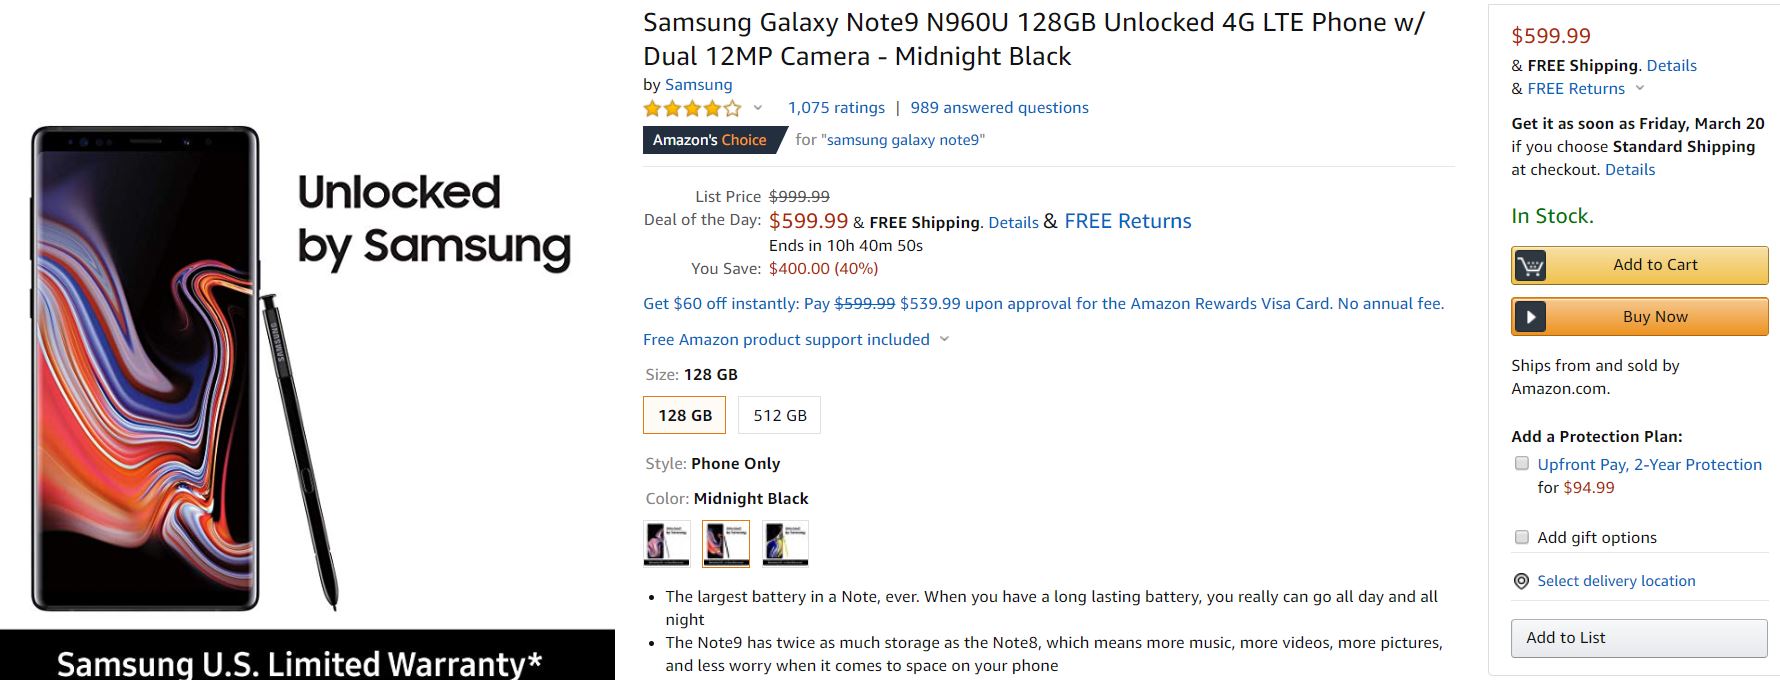 Samsung Galaxy Note 9 Amazon Deal